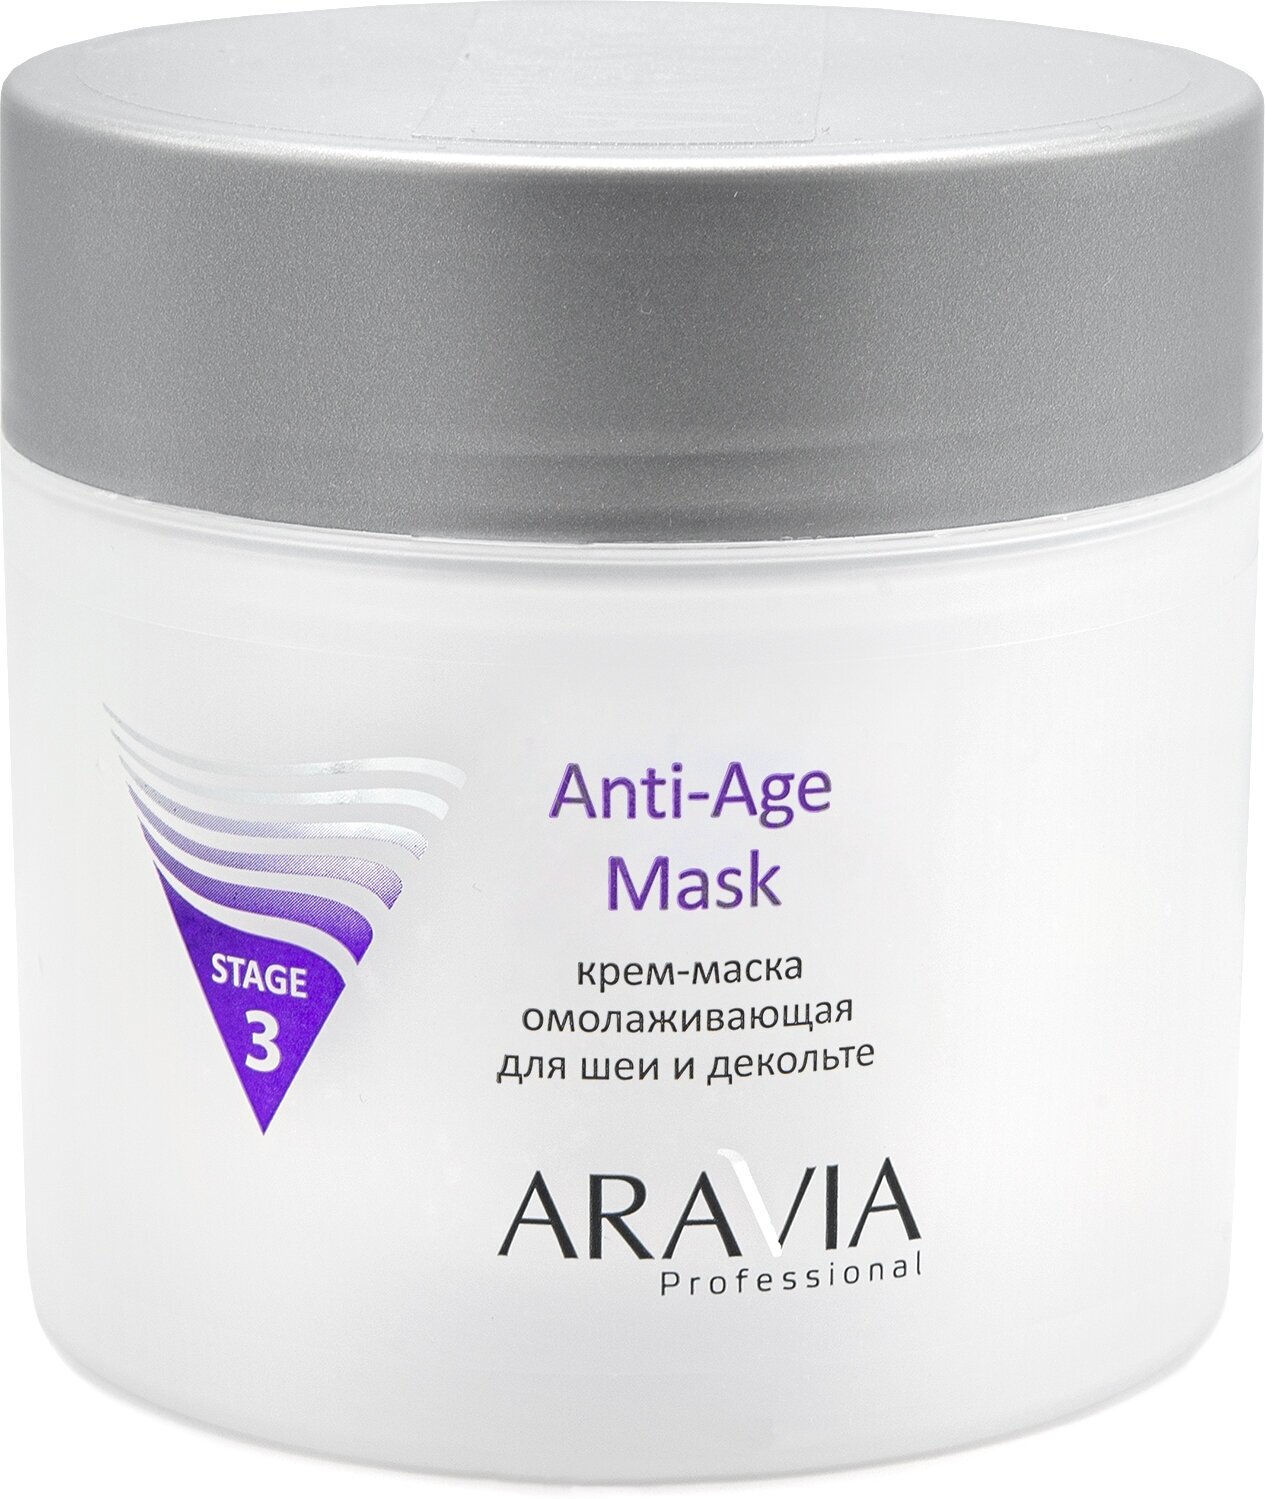 ARAVIA Крем-маска омолаживающая для шеи и декольте Anti-Age Mask, 300 мл